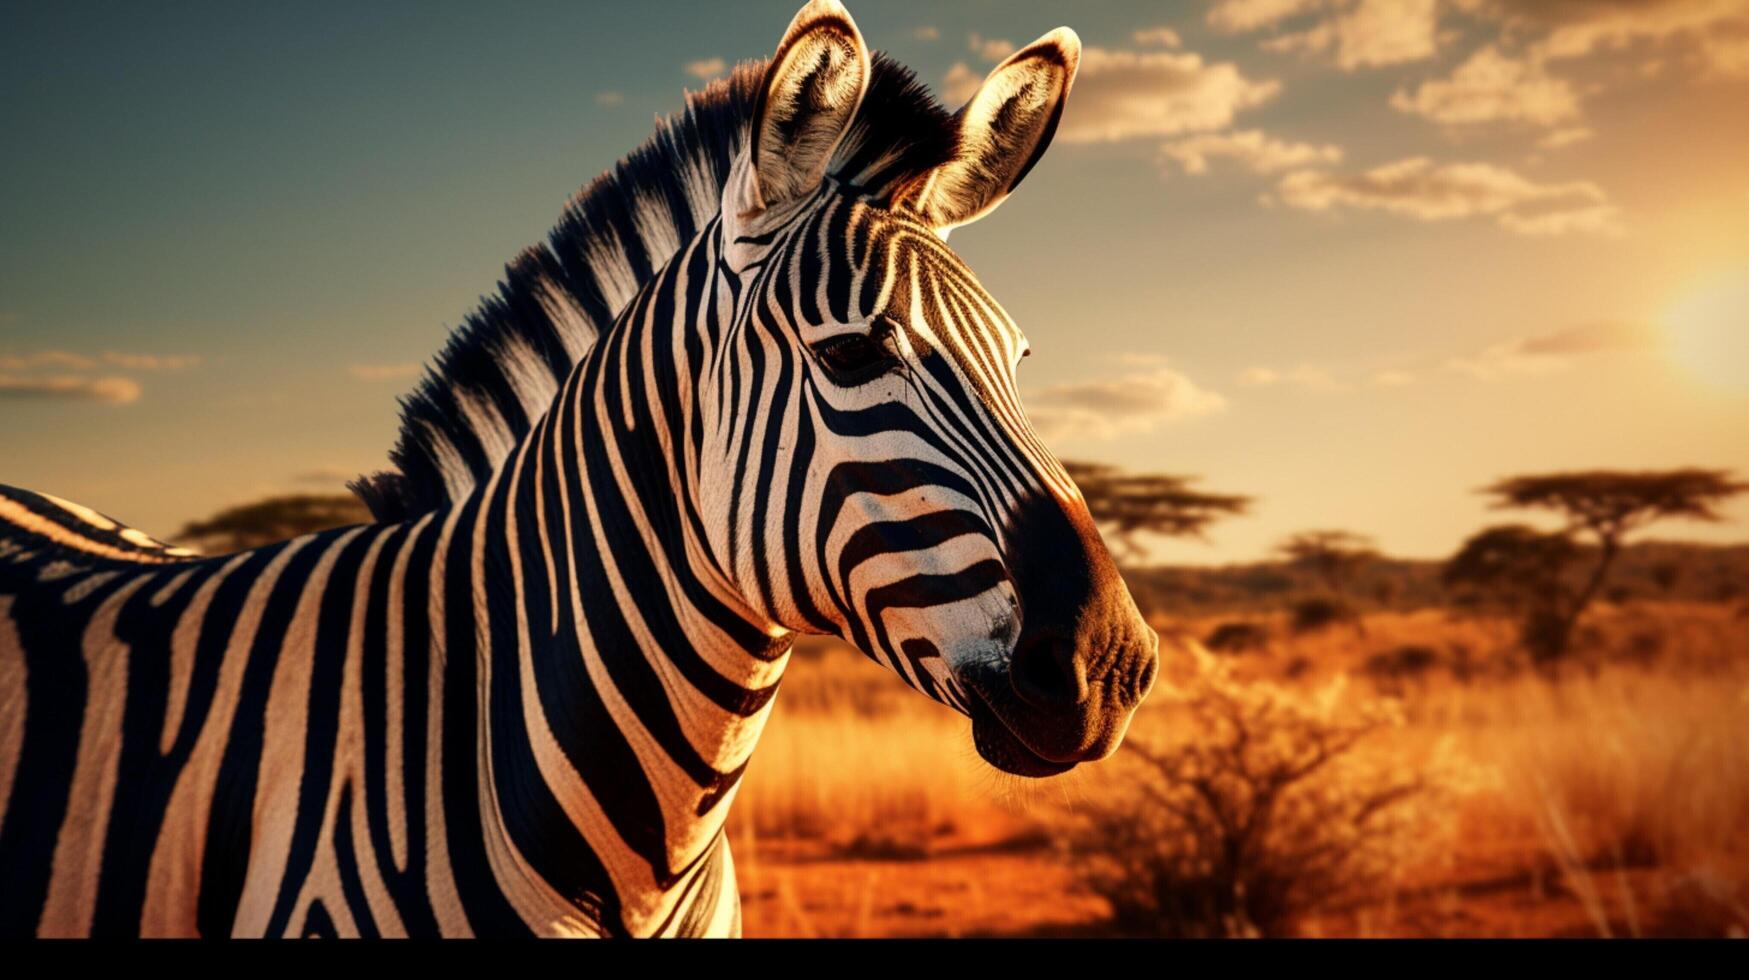 AI generated zebra high quality image photo